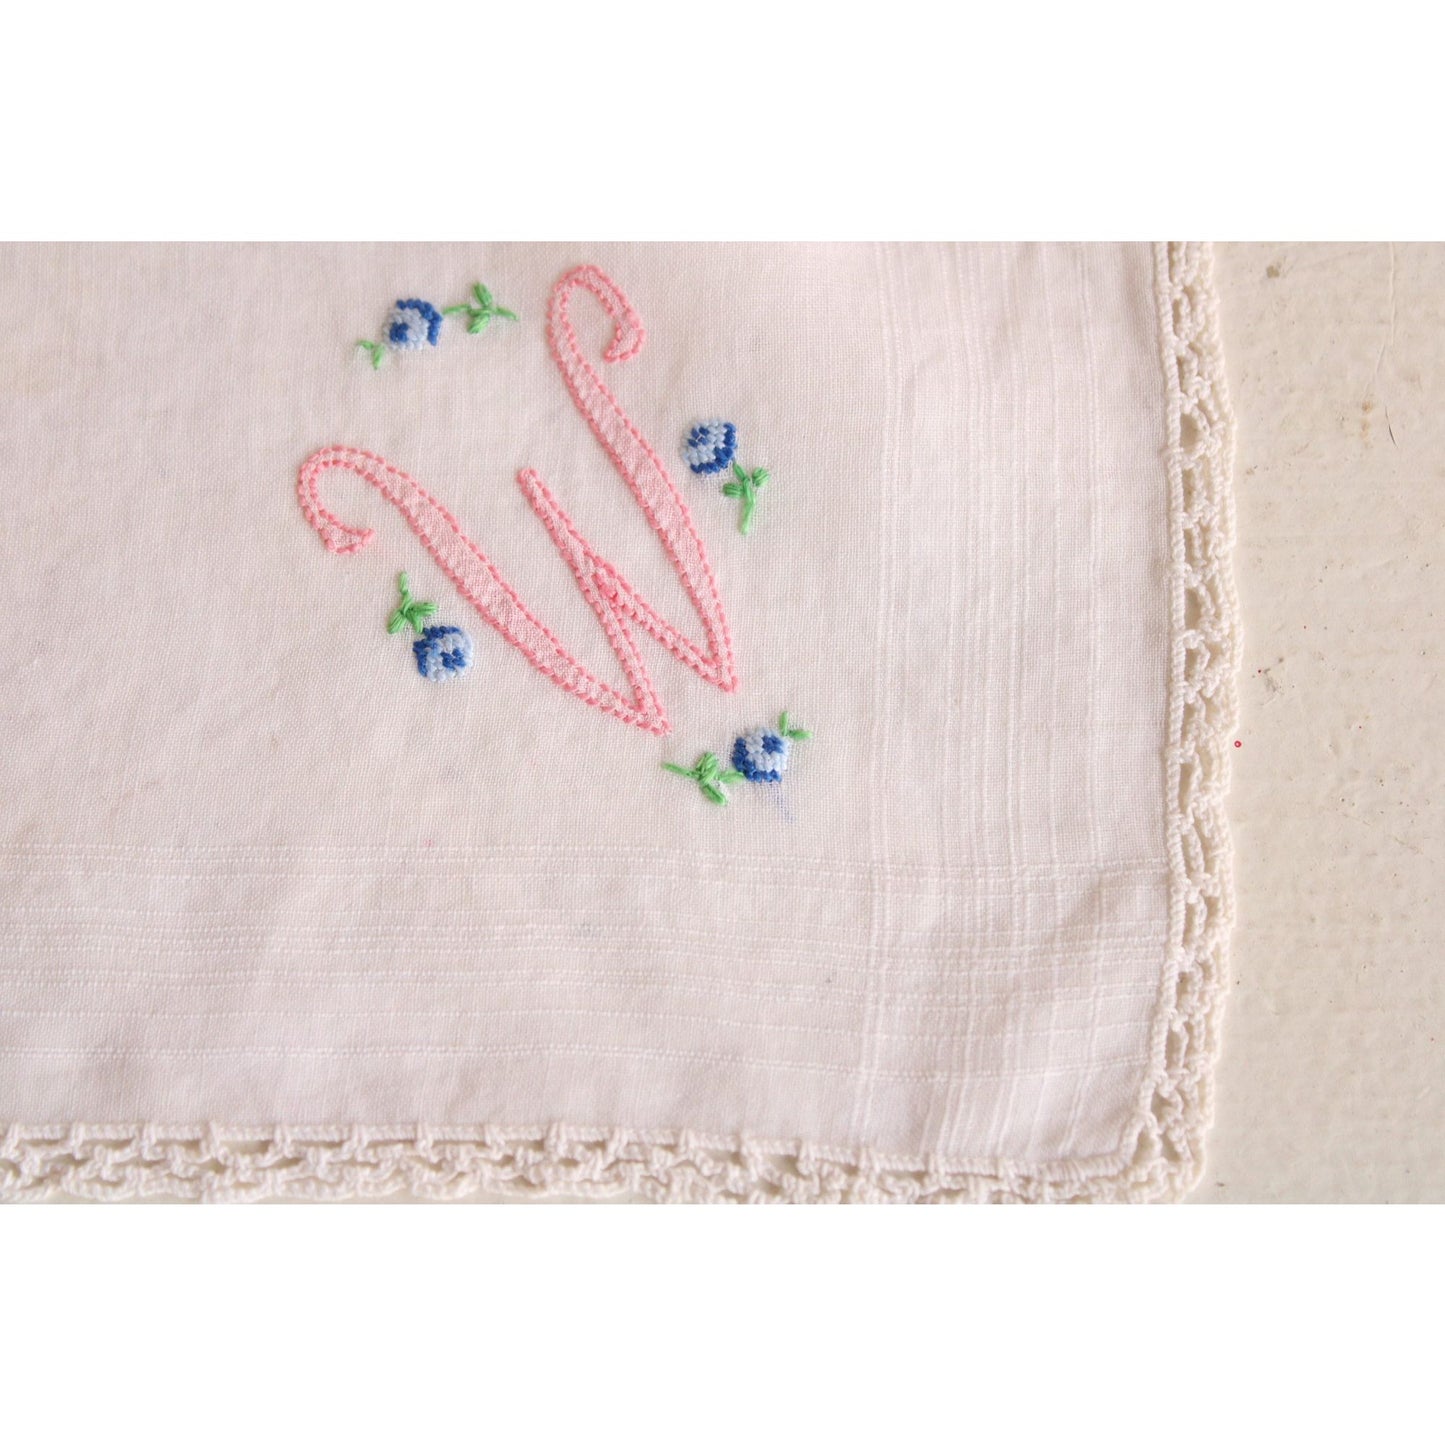 Vintage Handkerchief in White Cotton, Monogrammed with W